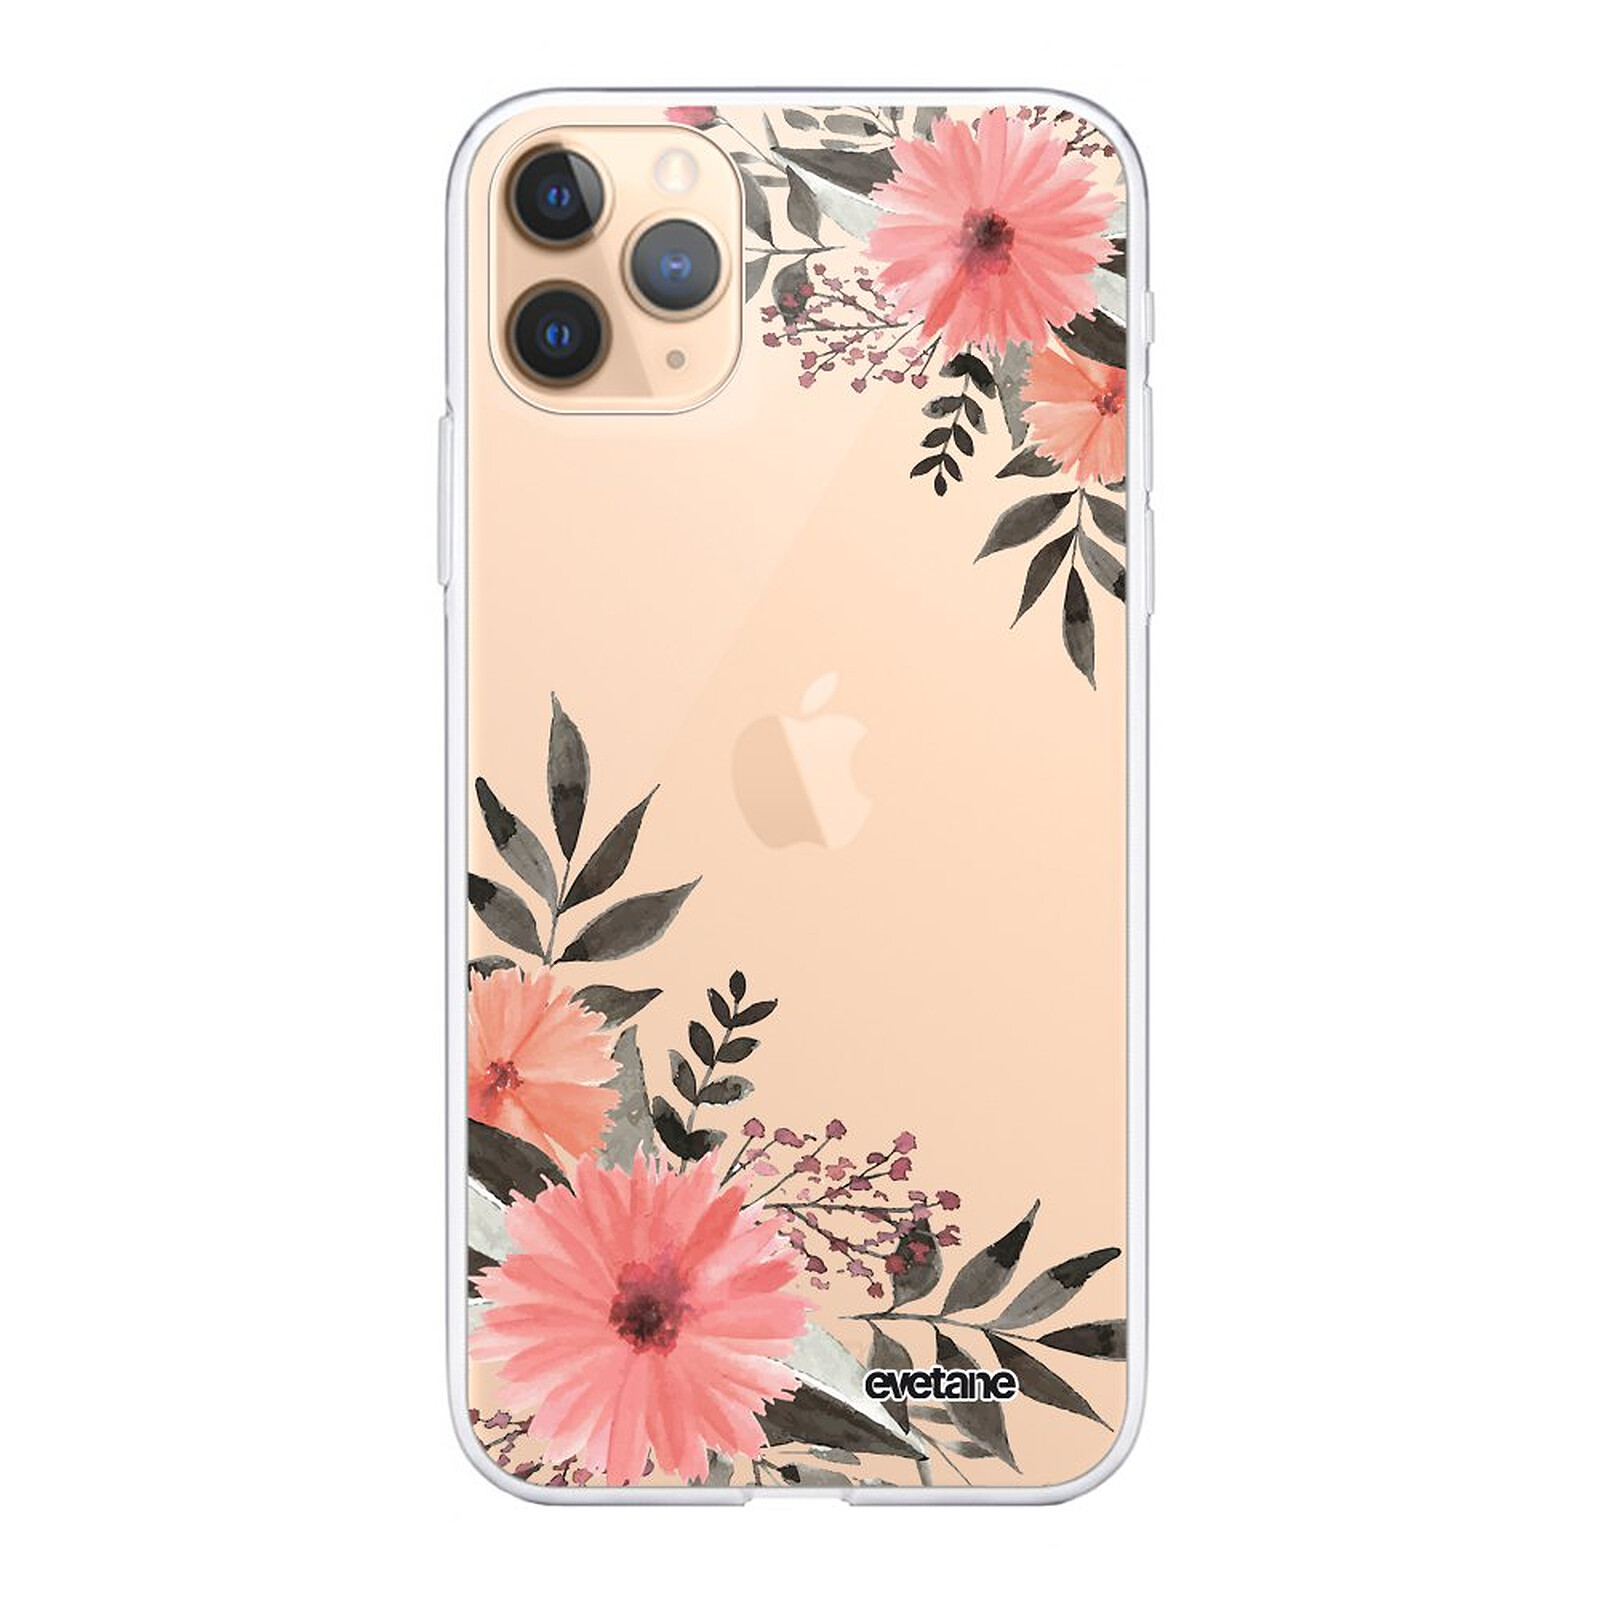 Evetane Coque iPhone 11 Pro Max silicone transparente Motif Fleurs roses ultra  resistant - Coque téléphone - LDLC